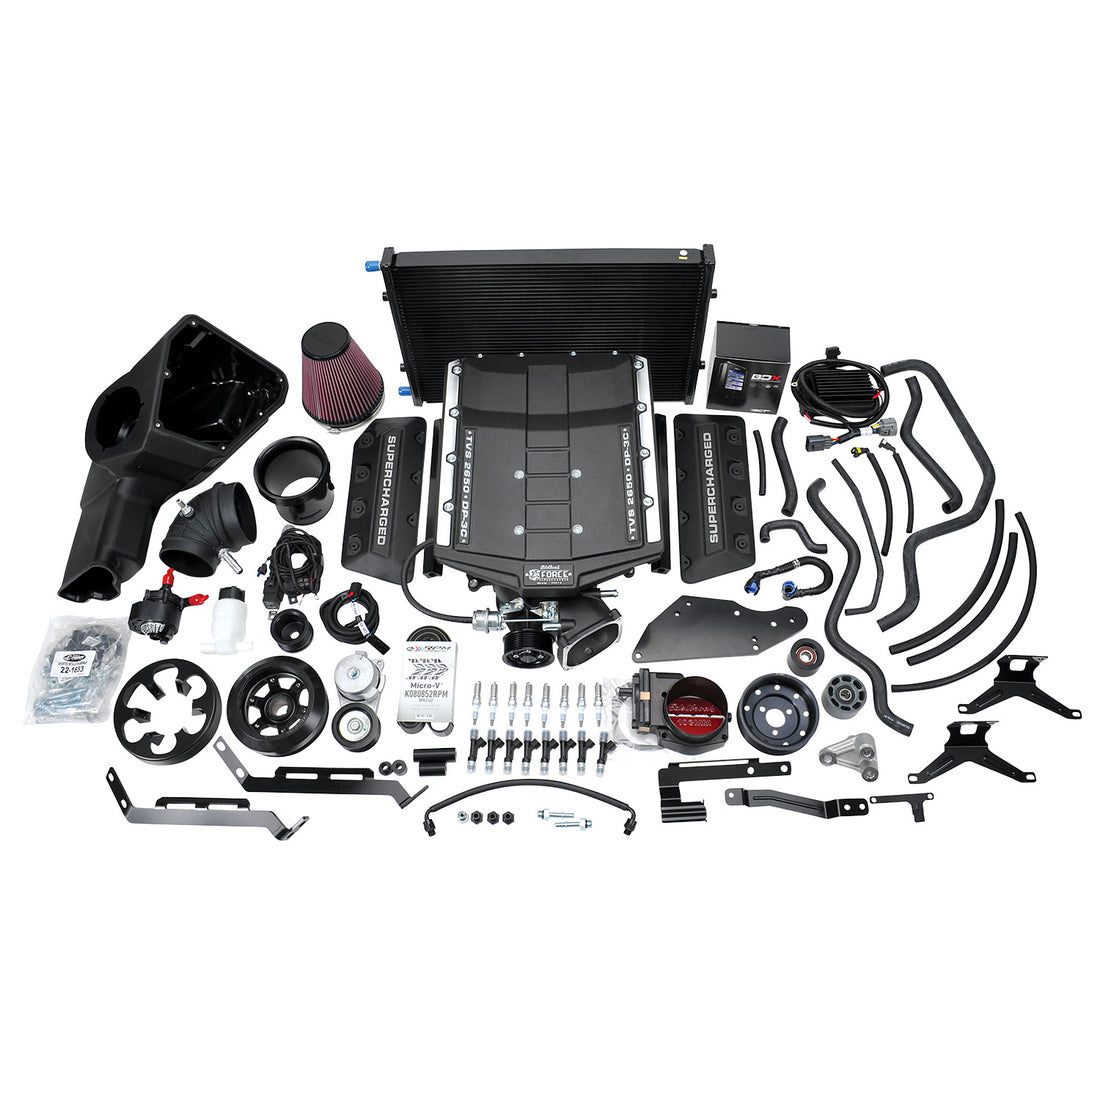 Edelbrock Stg 2 Complete Supercharger #15388 For 18-21 Ford Mustang 5.0L W/ Tune Edelbrock